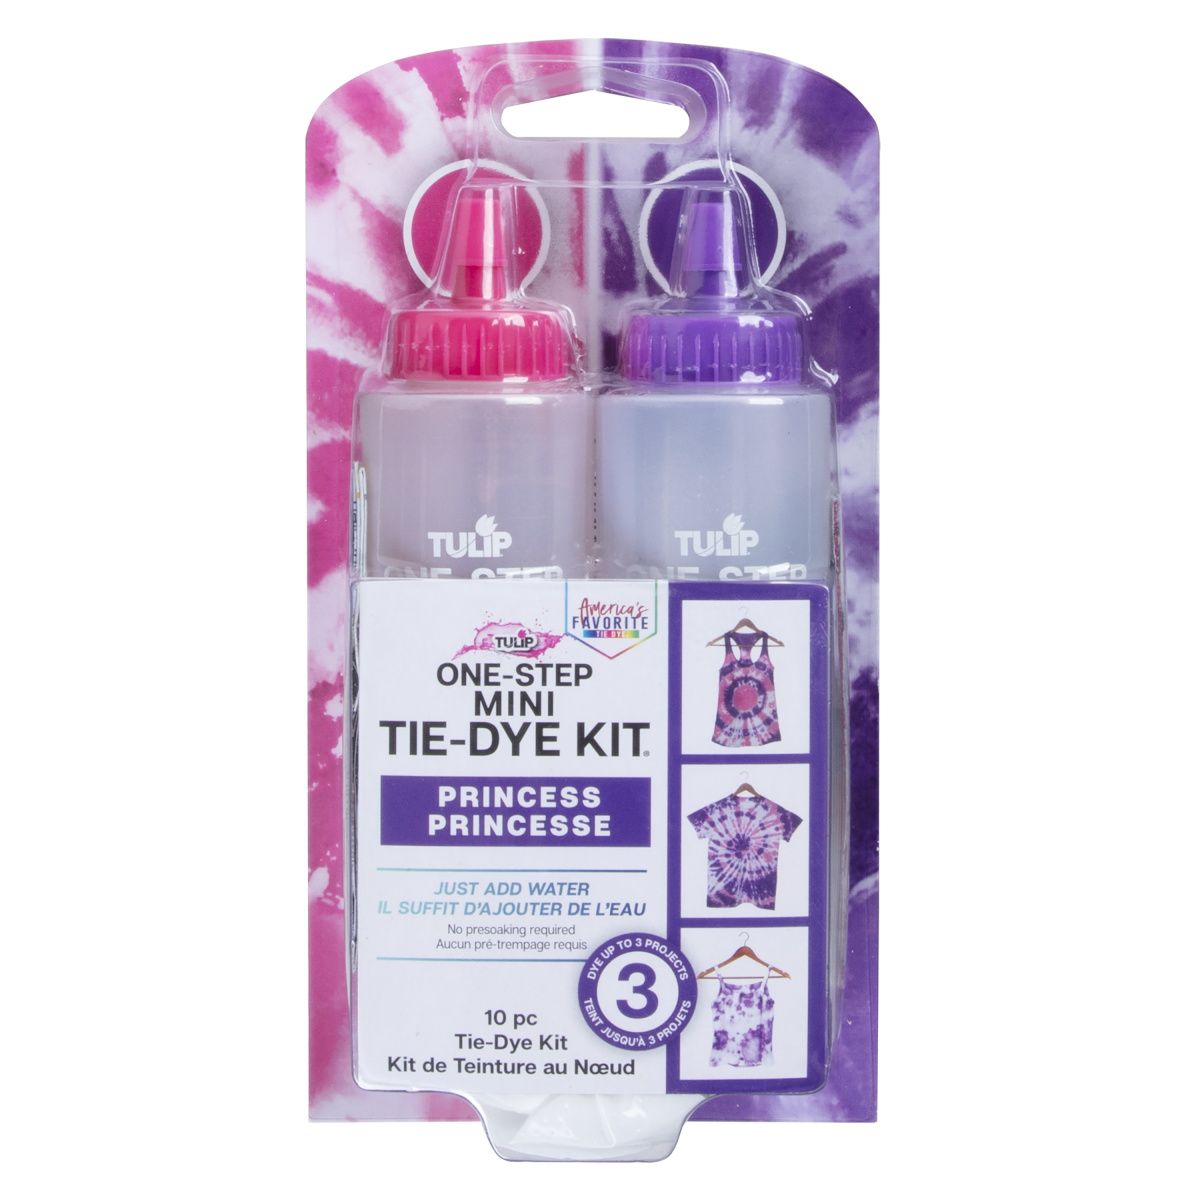 Tulip one-step tie dye • Two-minute tie dye kit mini Princess